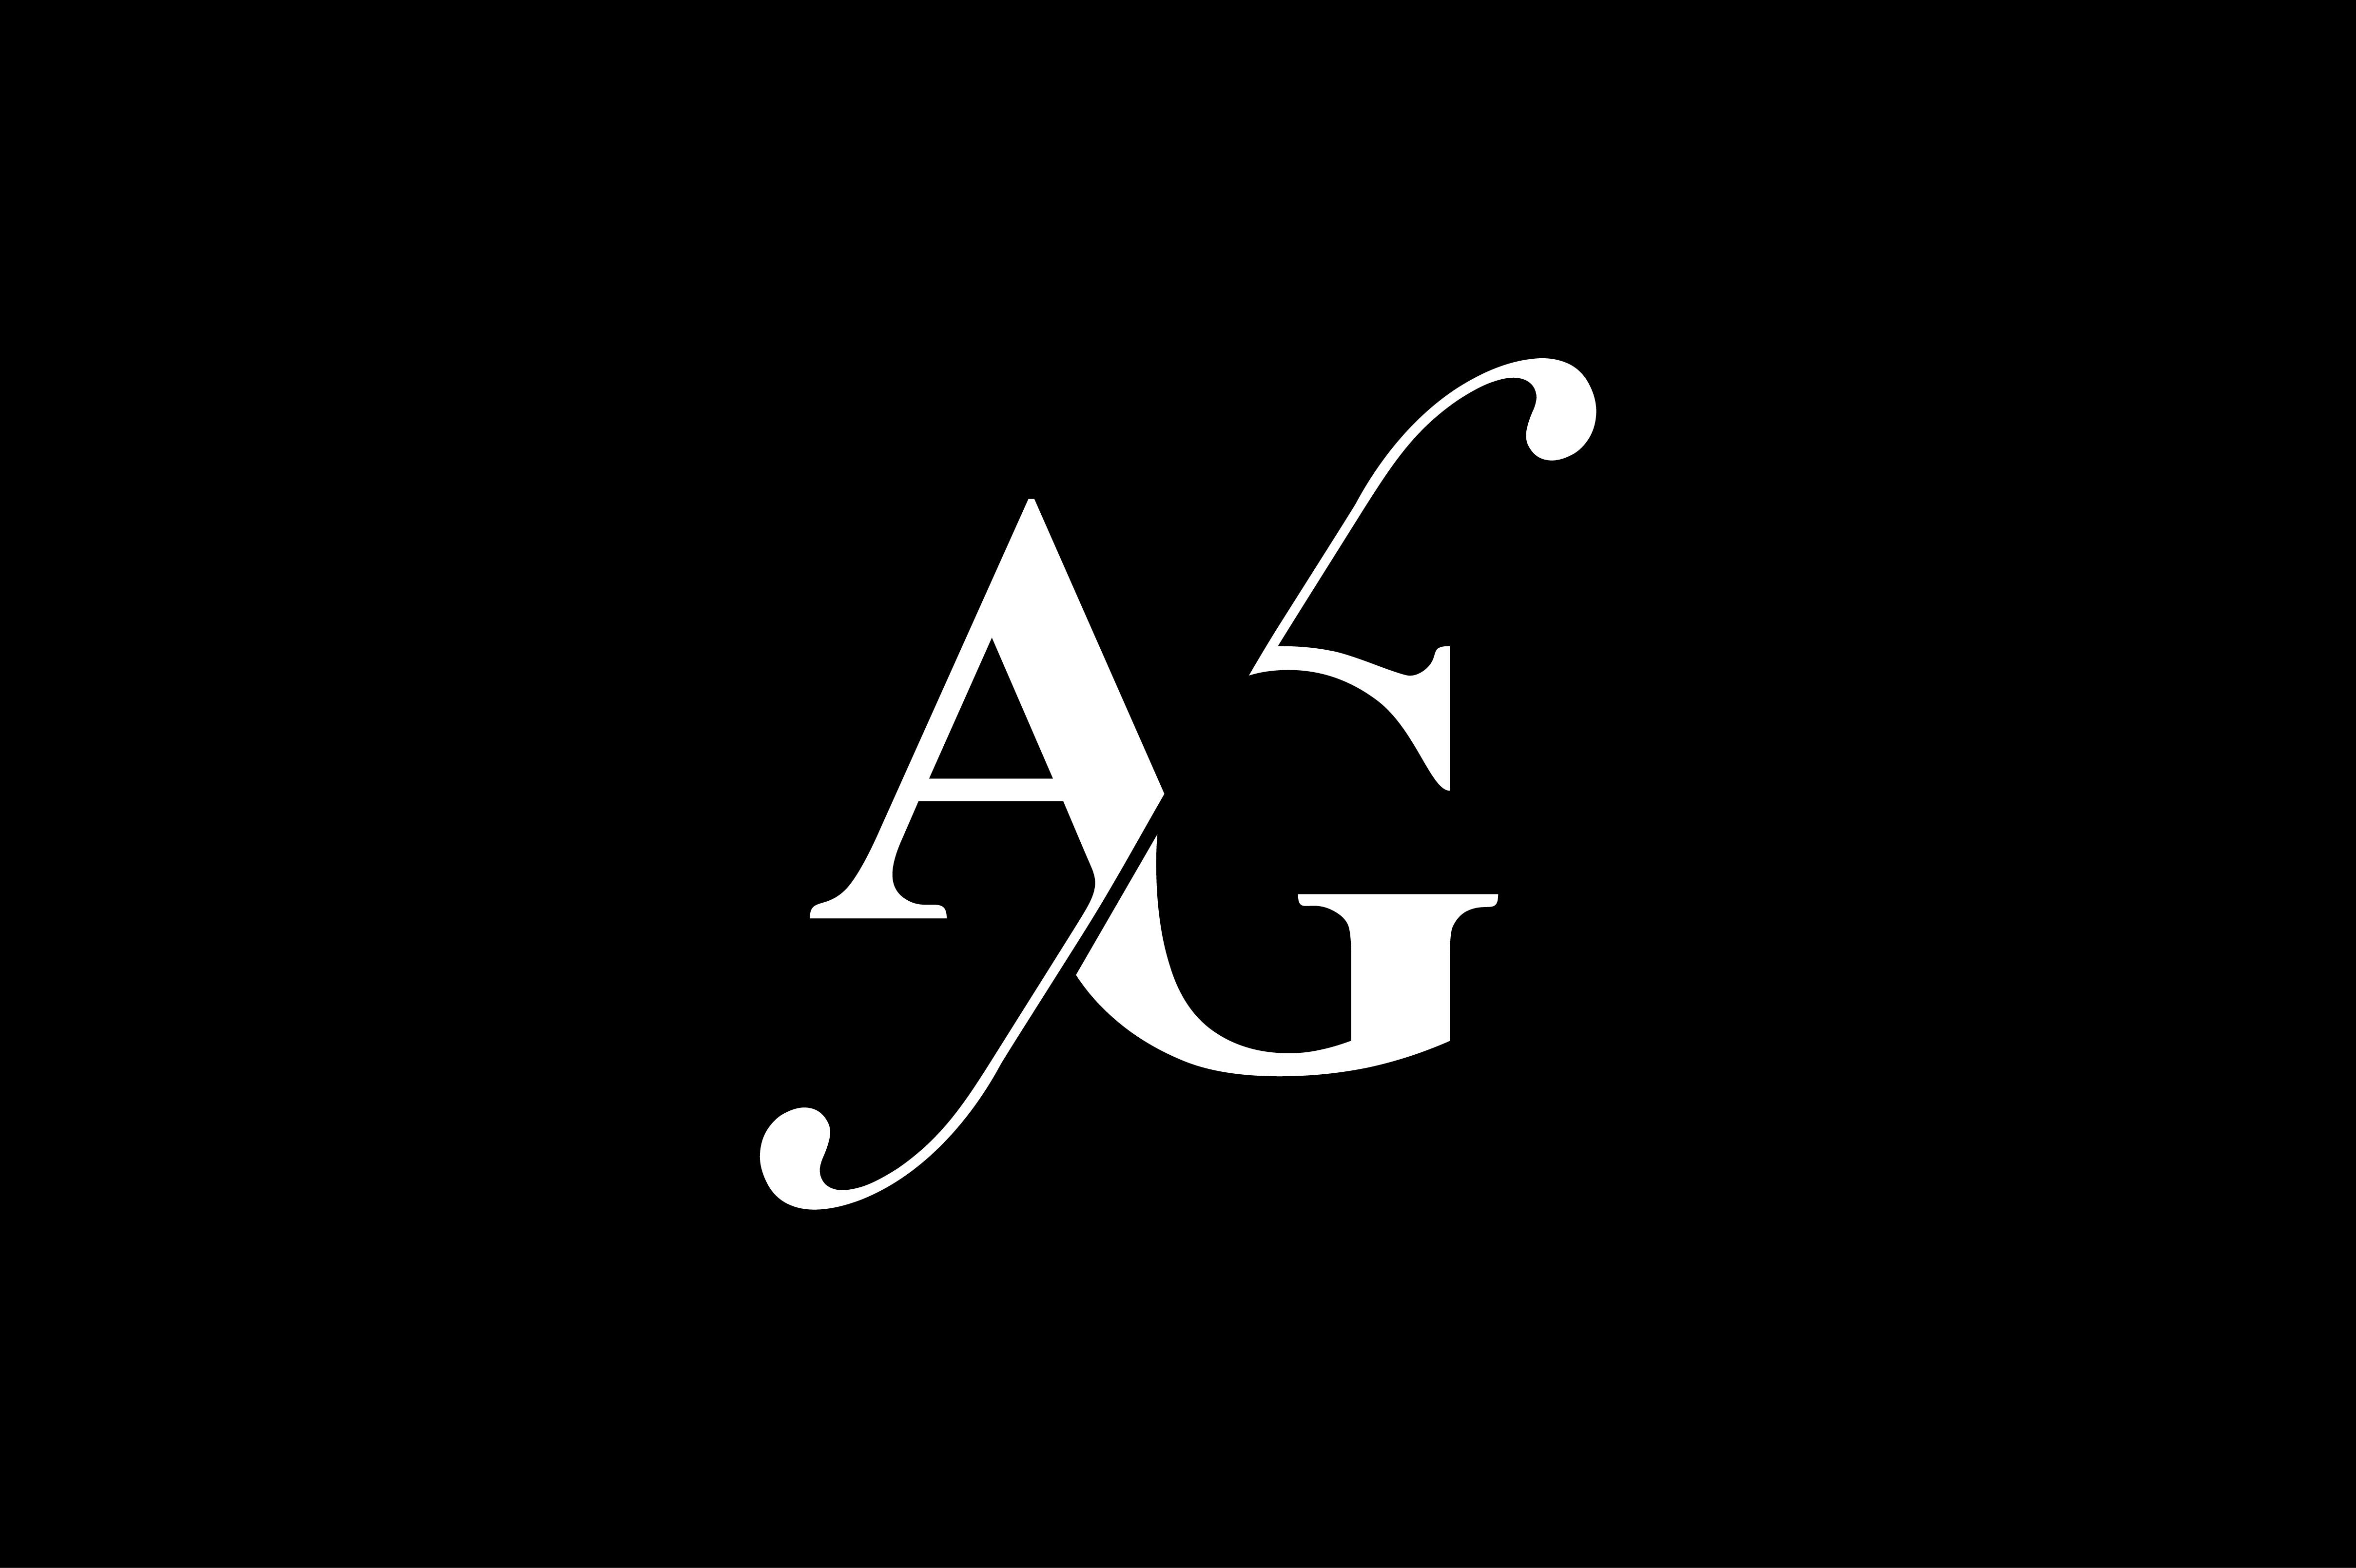  AG Monogram Logo Design By Vectorseller TheHungryJPEG